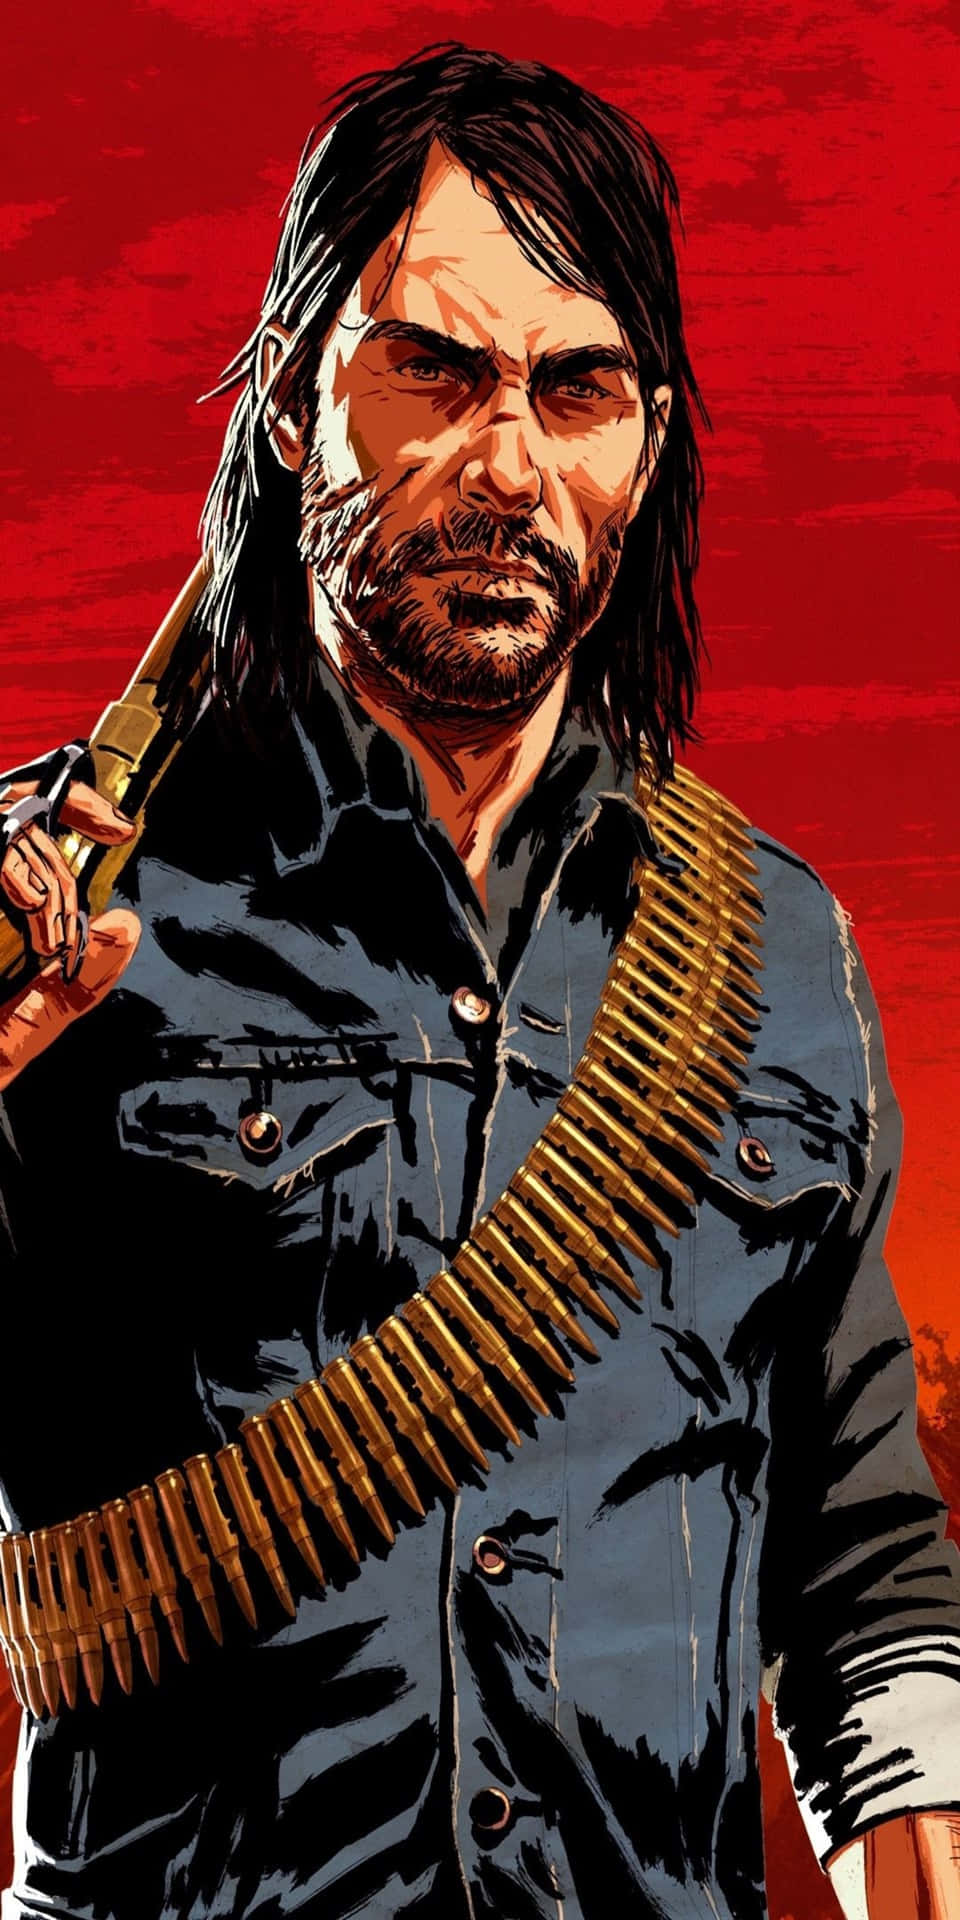 Pixel3-bakgrundsbild Med Red Dead Redemption 2 Röd Poster Av John Marston.